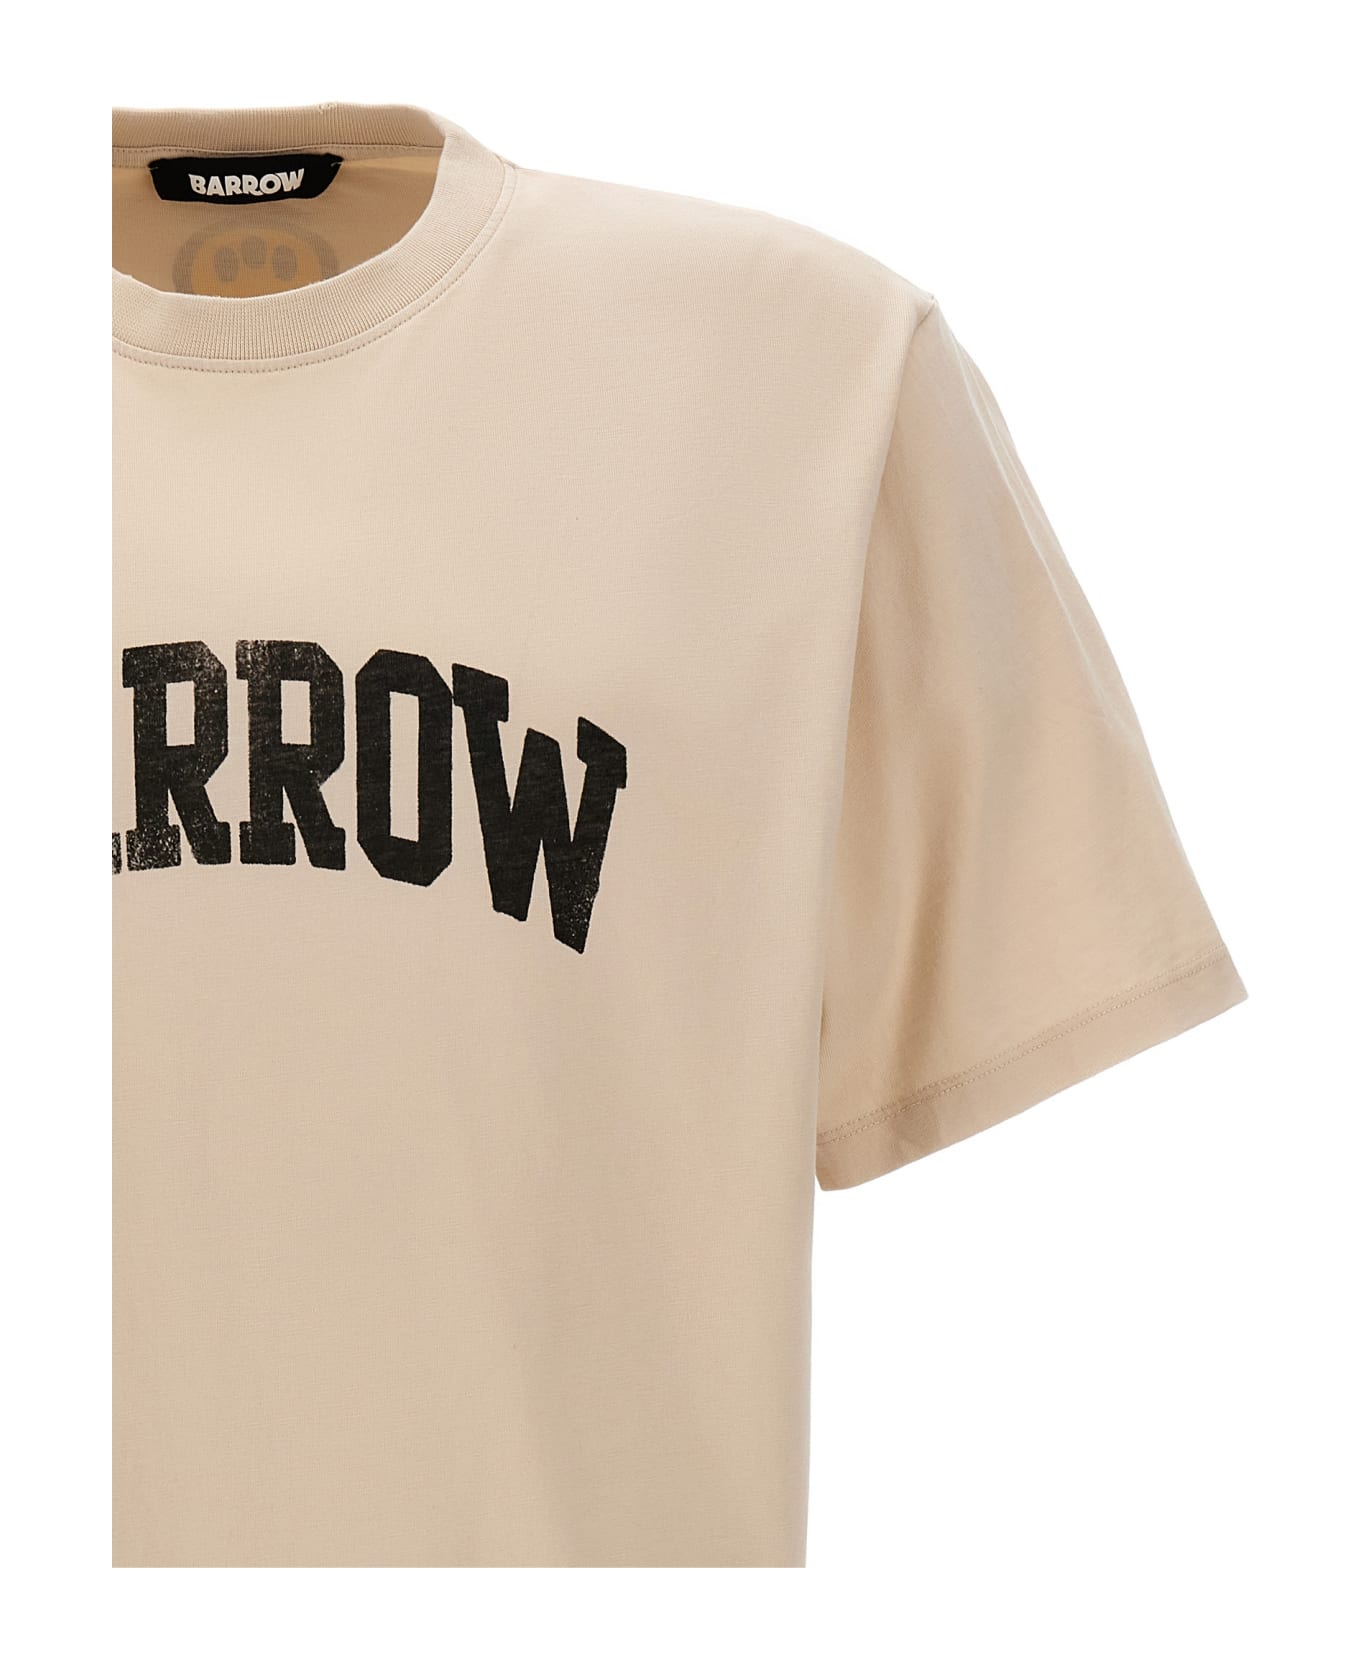 Barrow Logo Print T-shirt - Beige シャツ